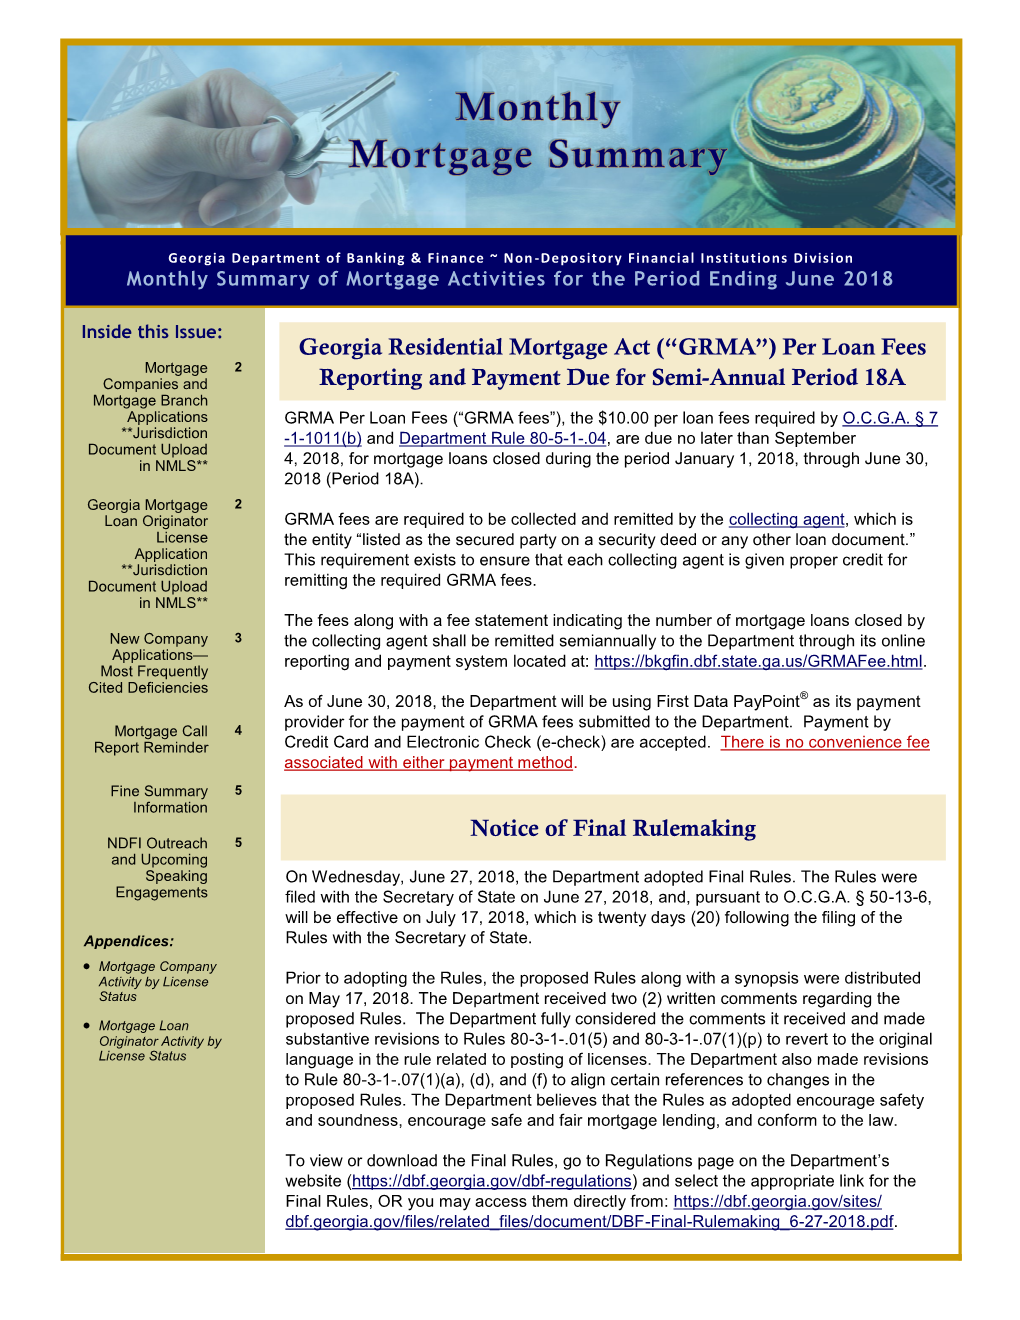 Georgia Residential Mortgage